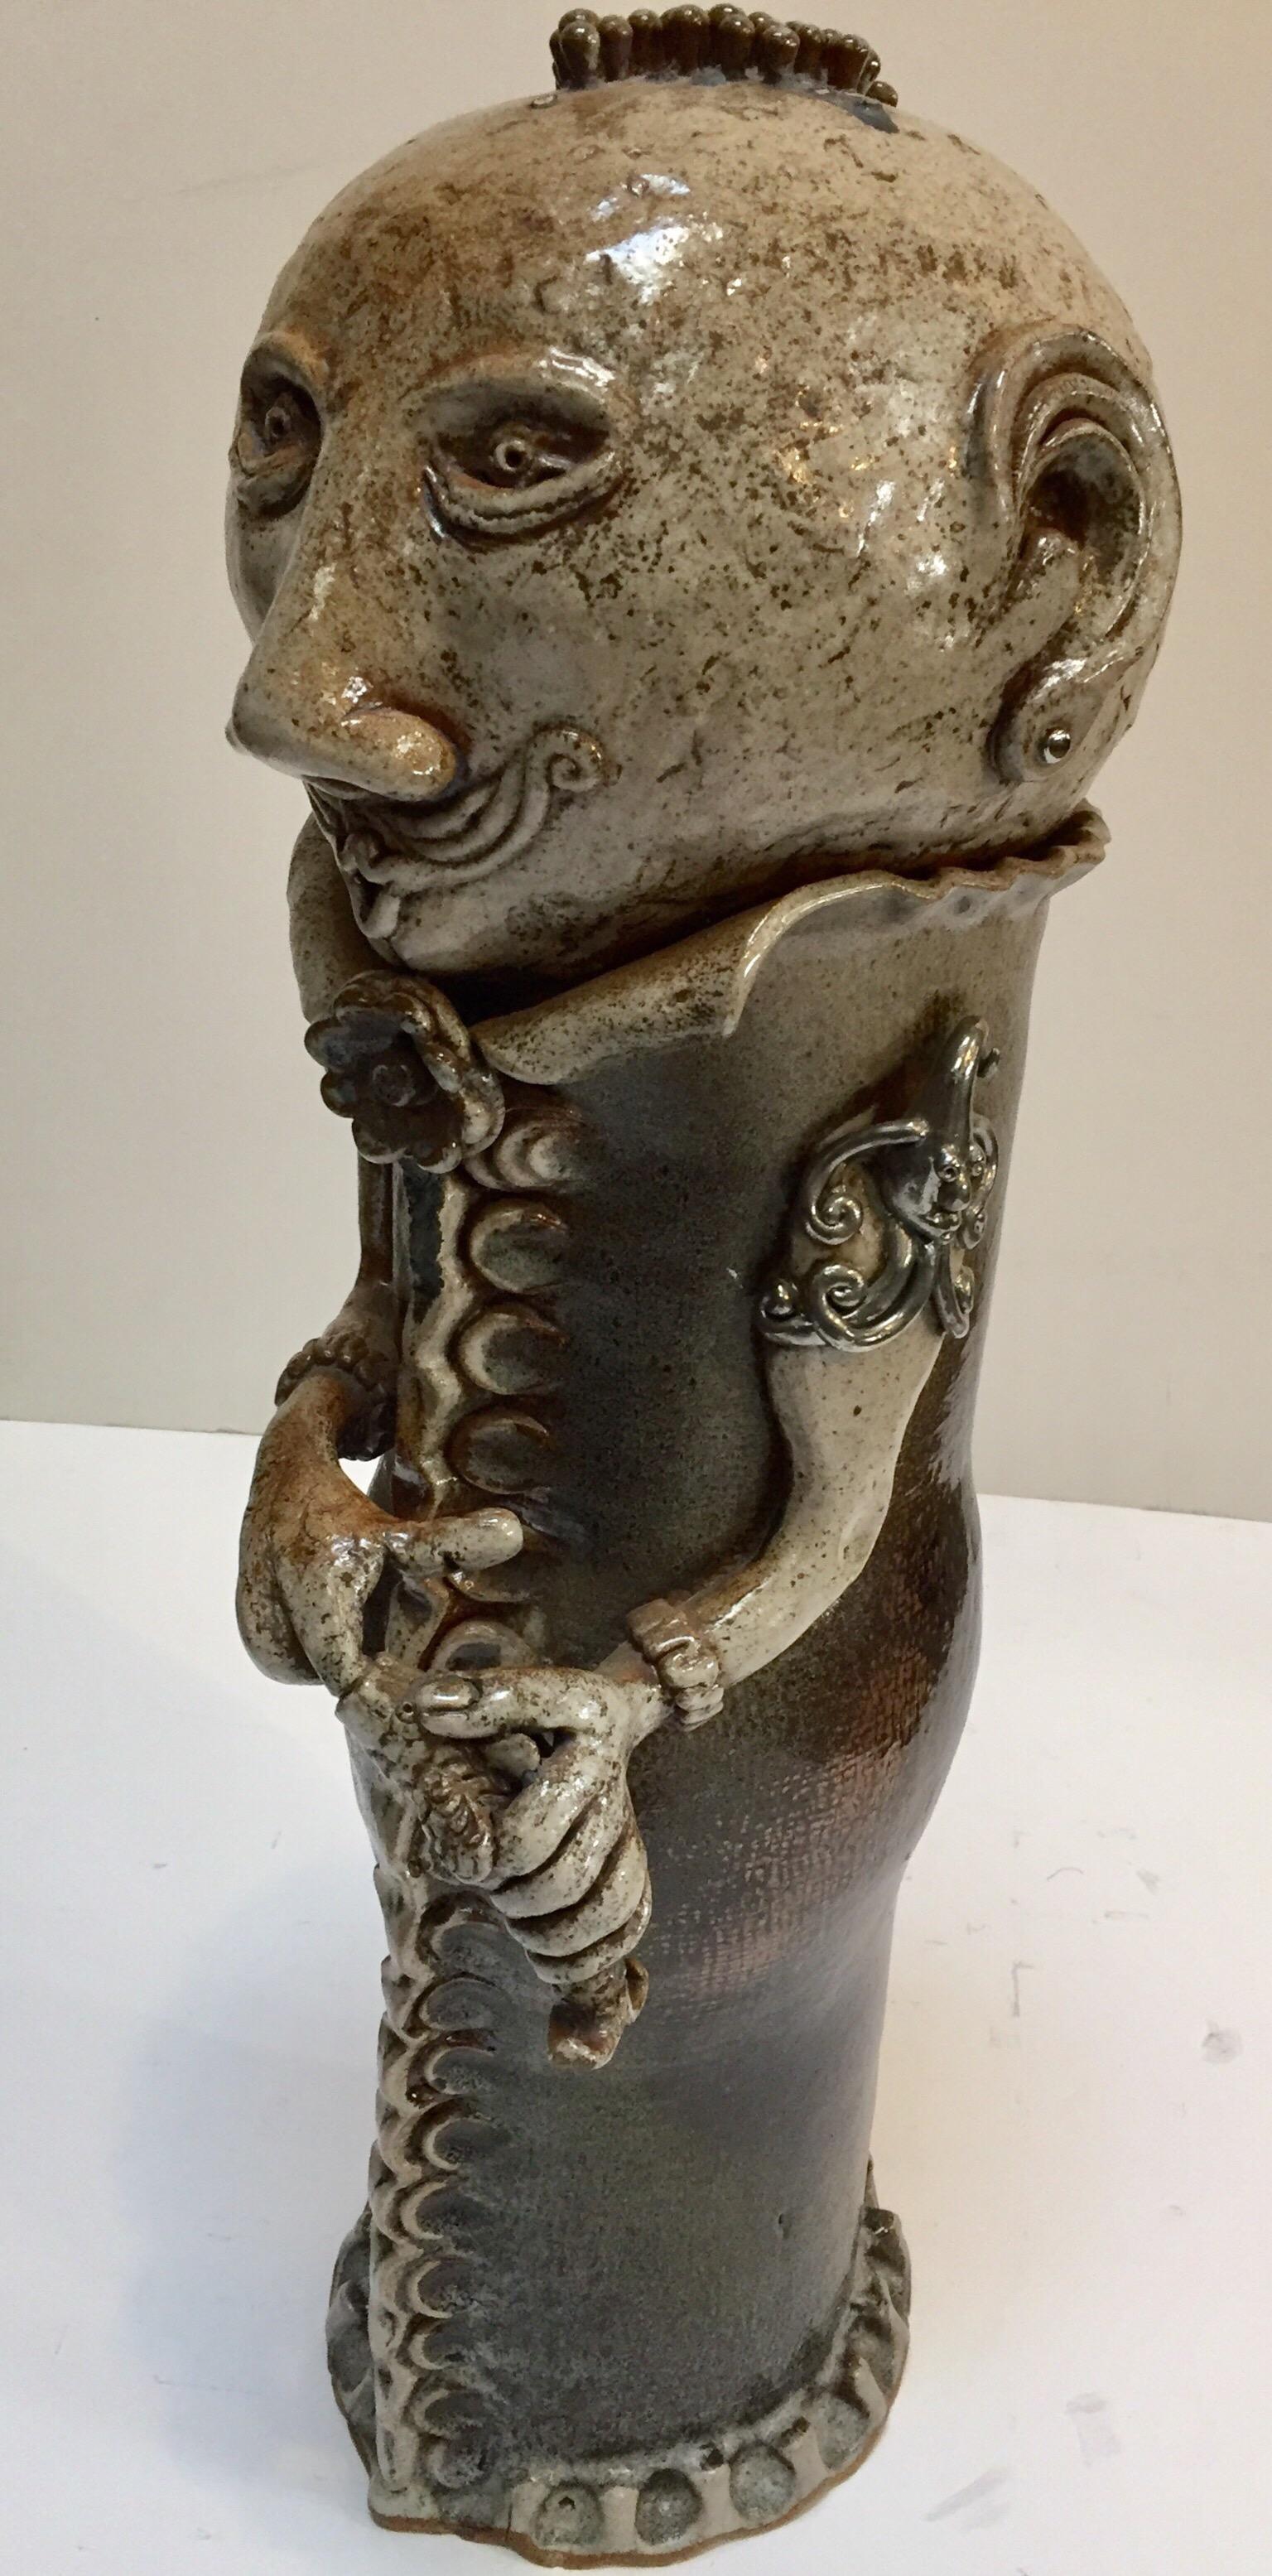 Art Studio Pop Brutalistische Fantasiefigur, signierte Keramik-Skulptur im Capron-Stil, signiert im Angebot 6